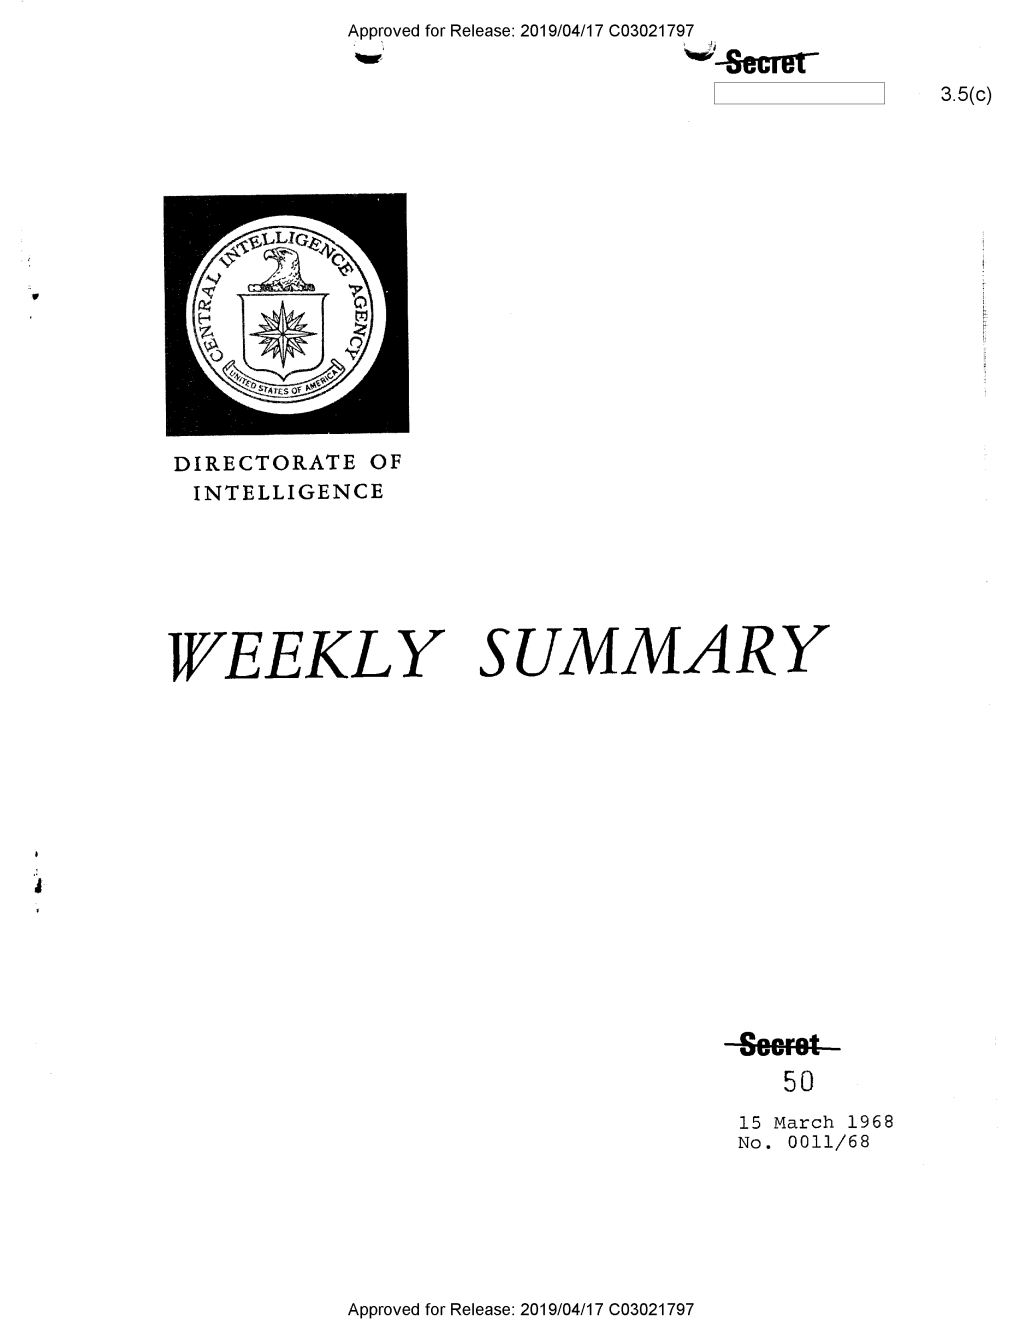 Weekly Summary, No. 0011/68, 15 March 1968